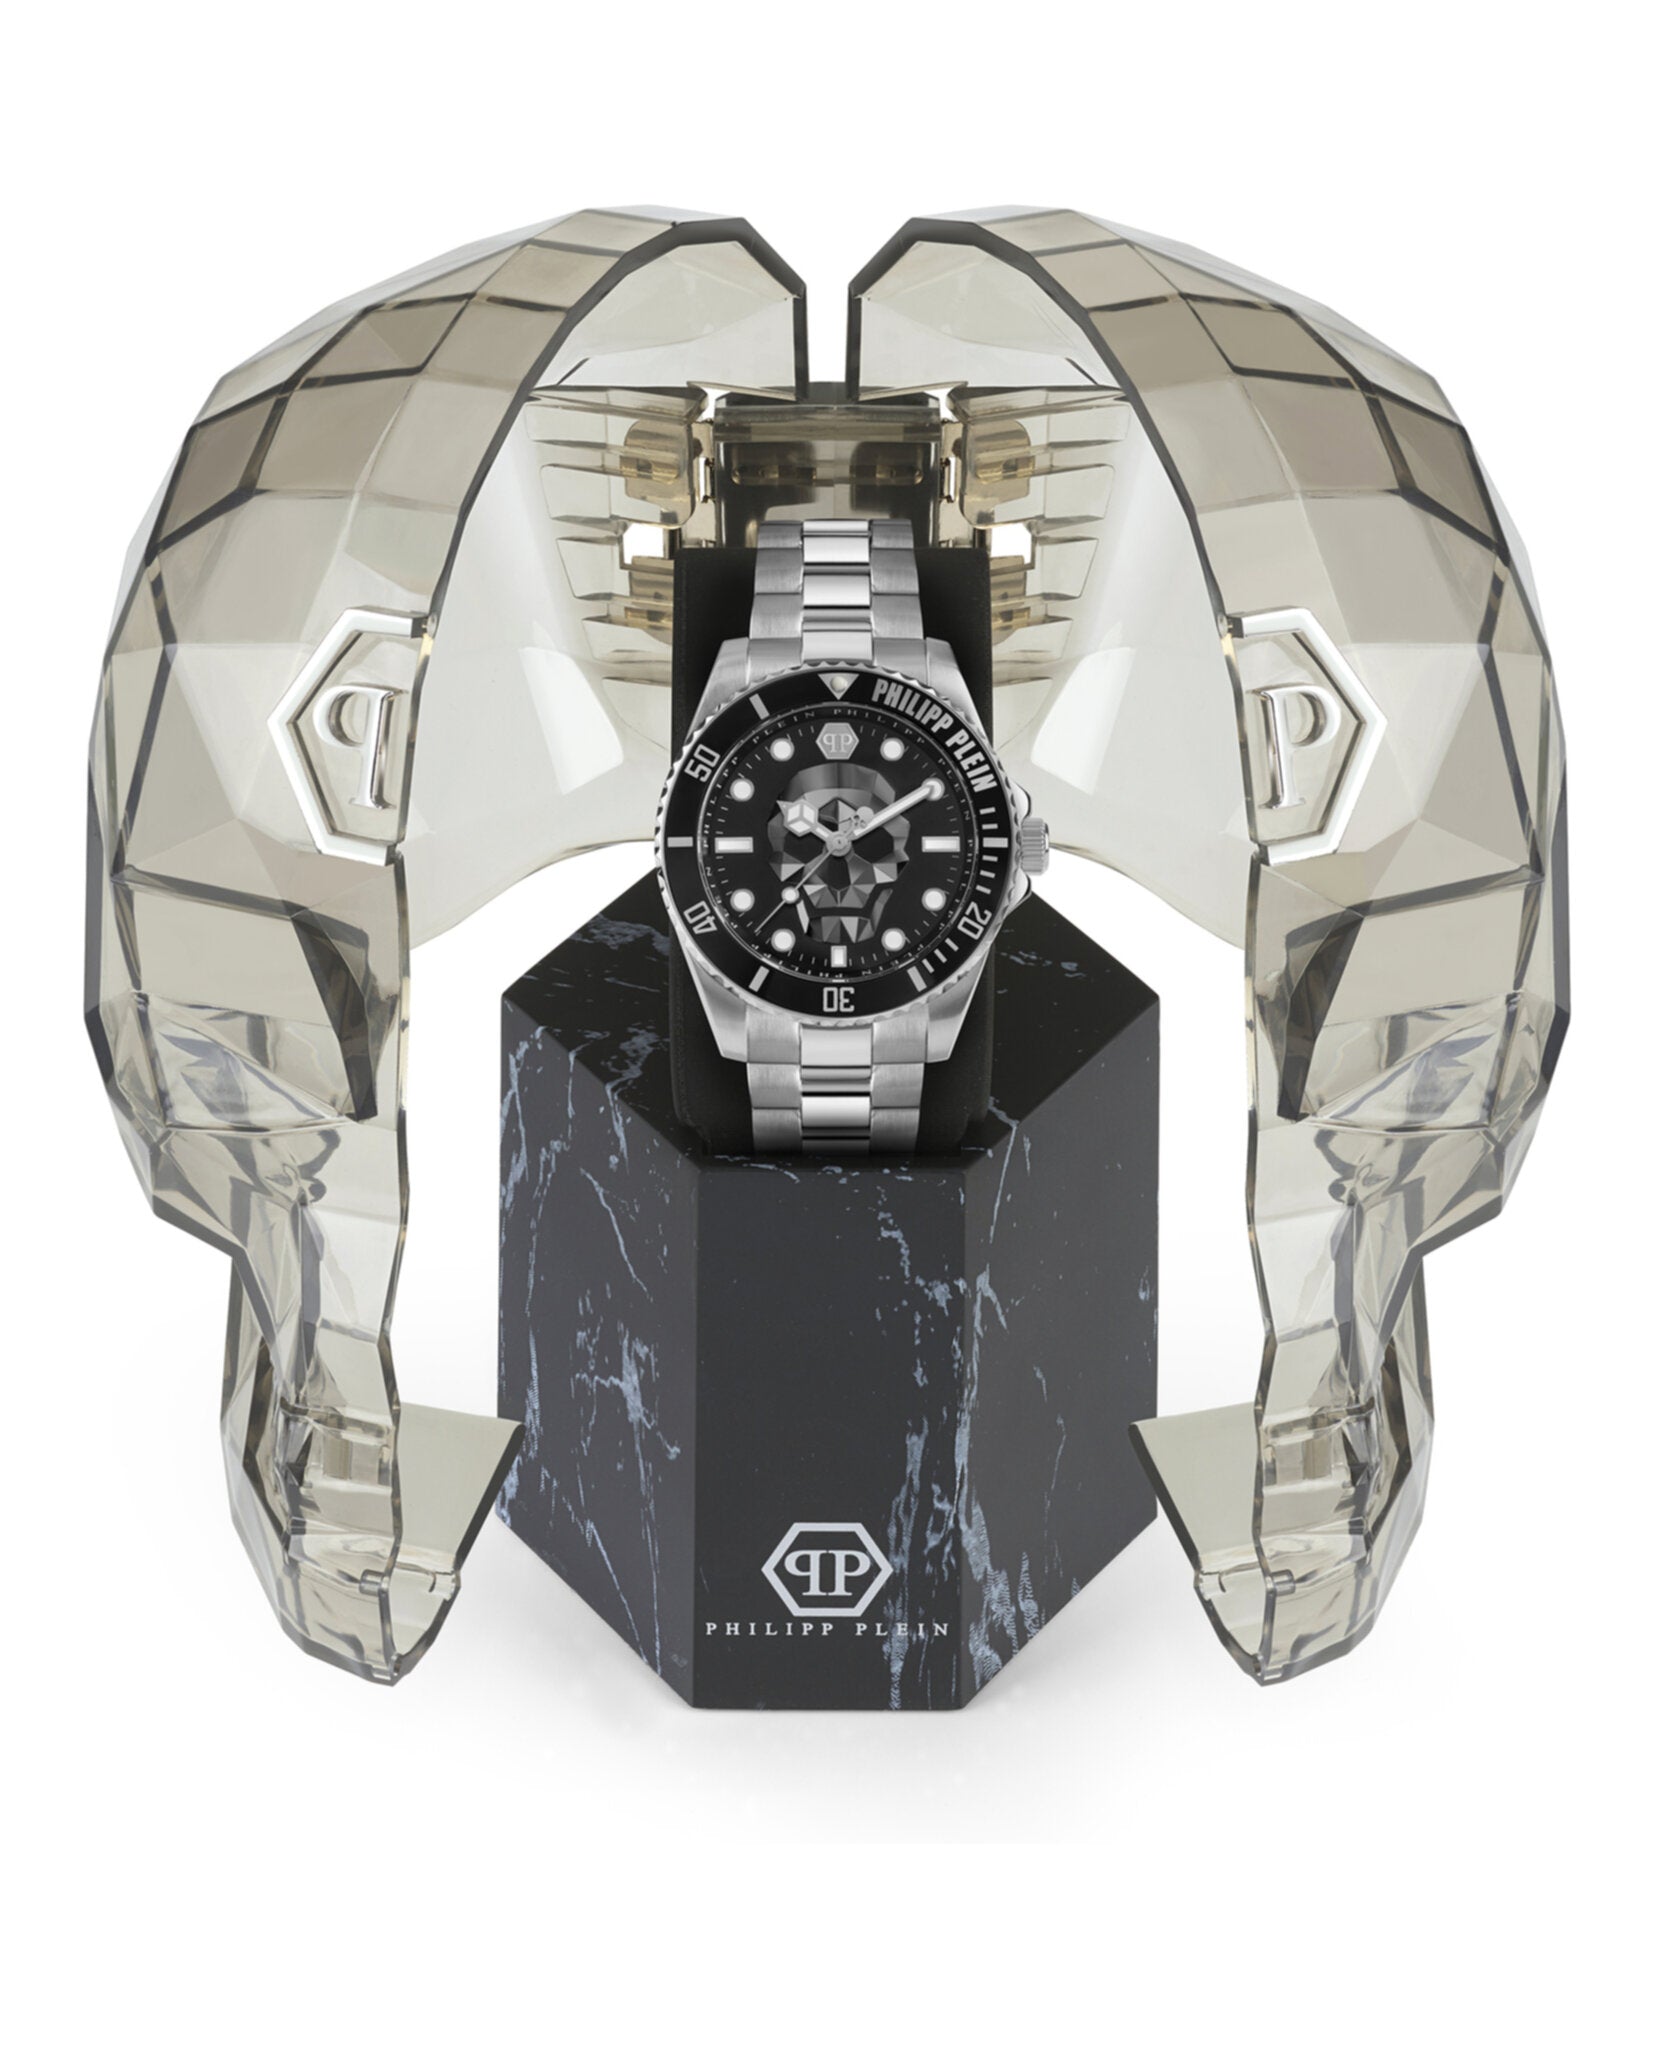 The $kull Diver Bracelet Watch